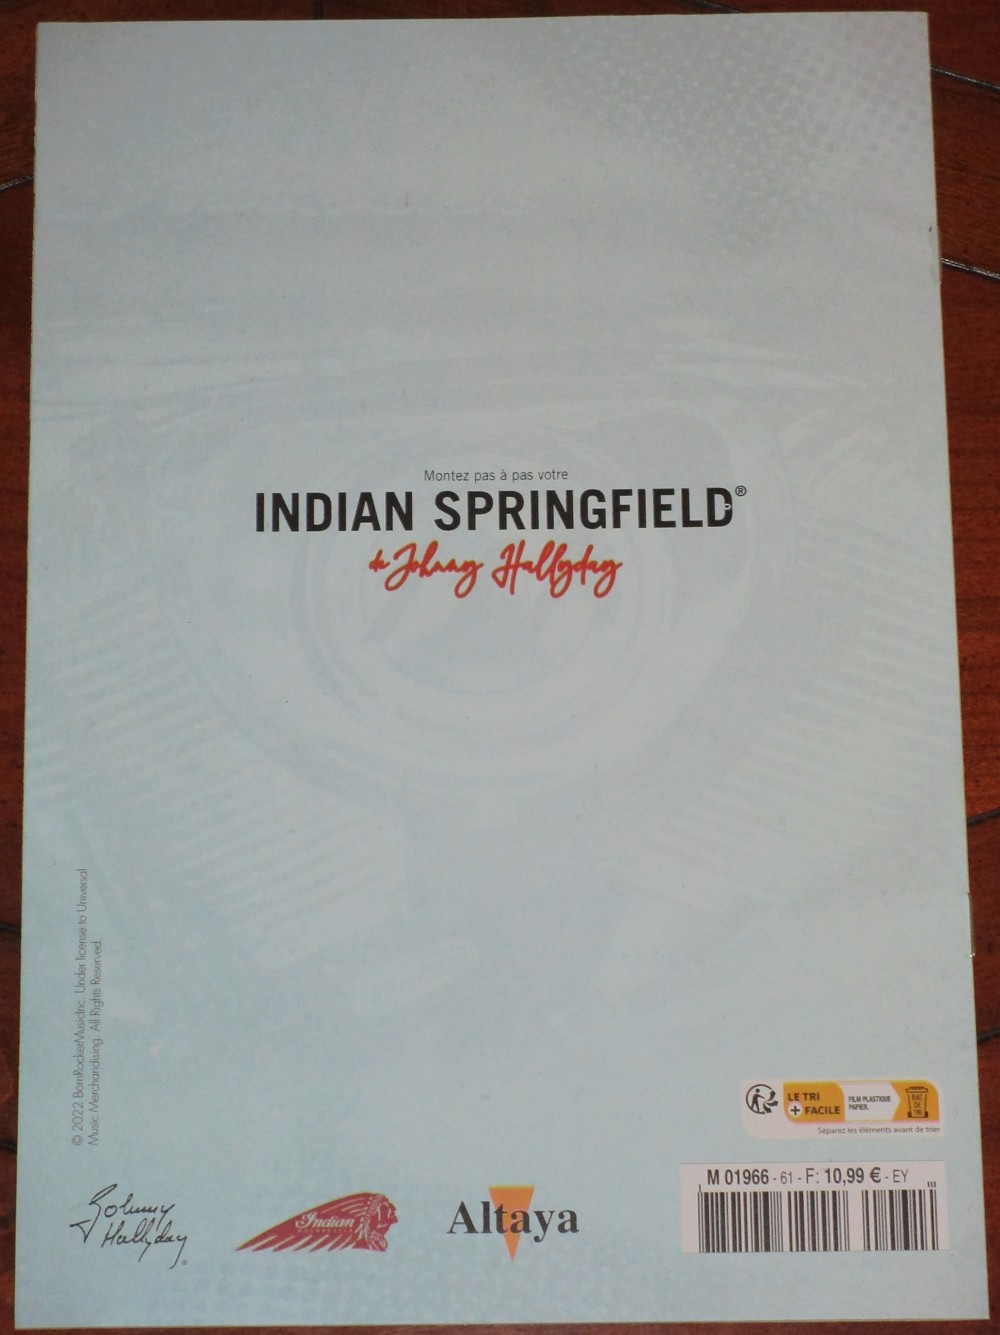 Altaya:Indian Springfield de JH n°61 021-al77